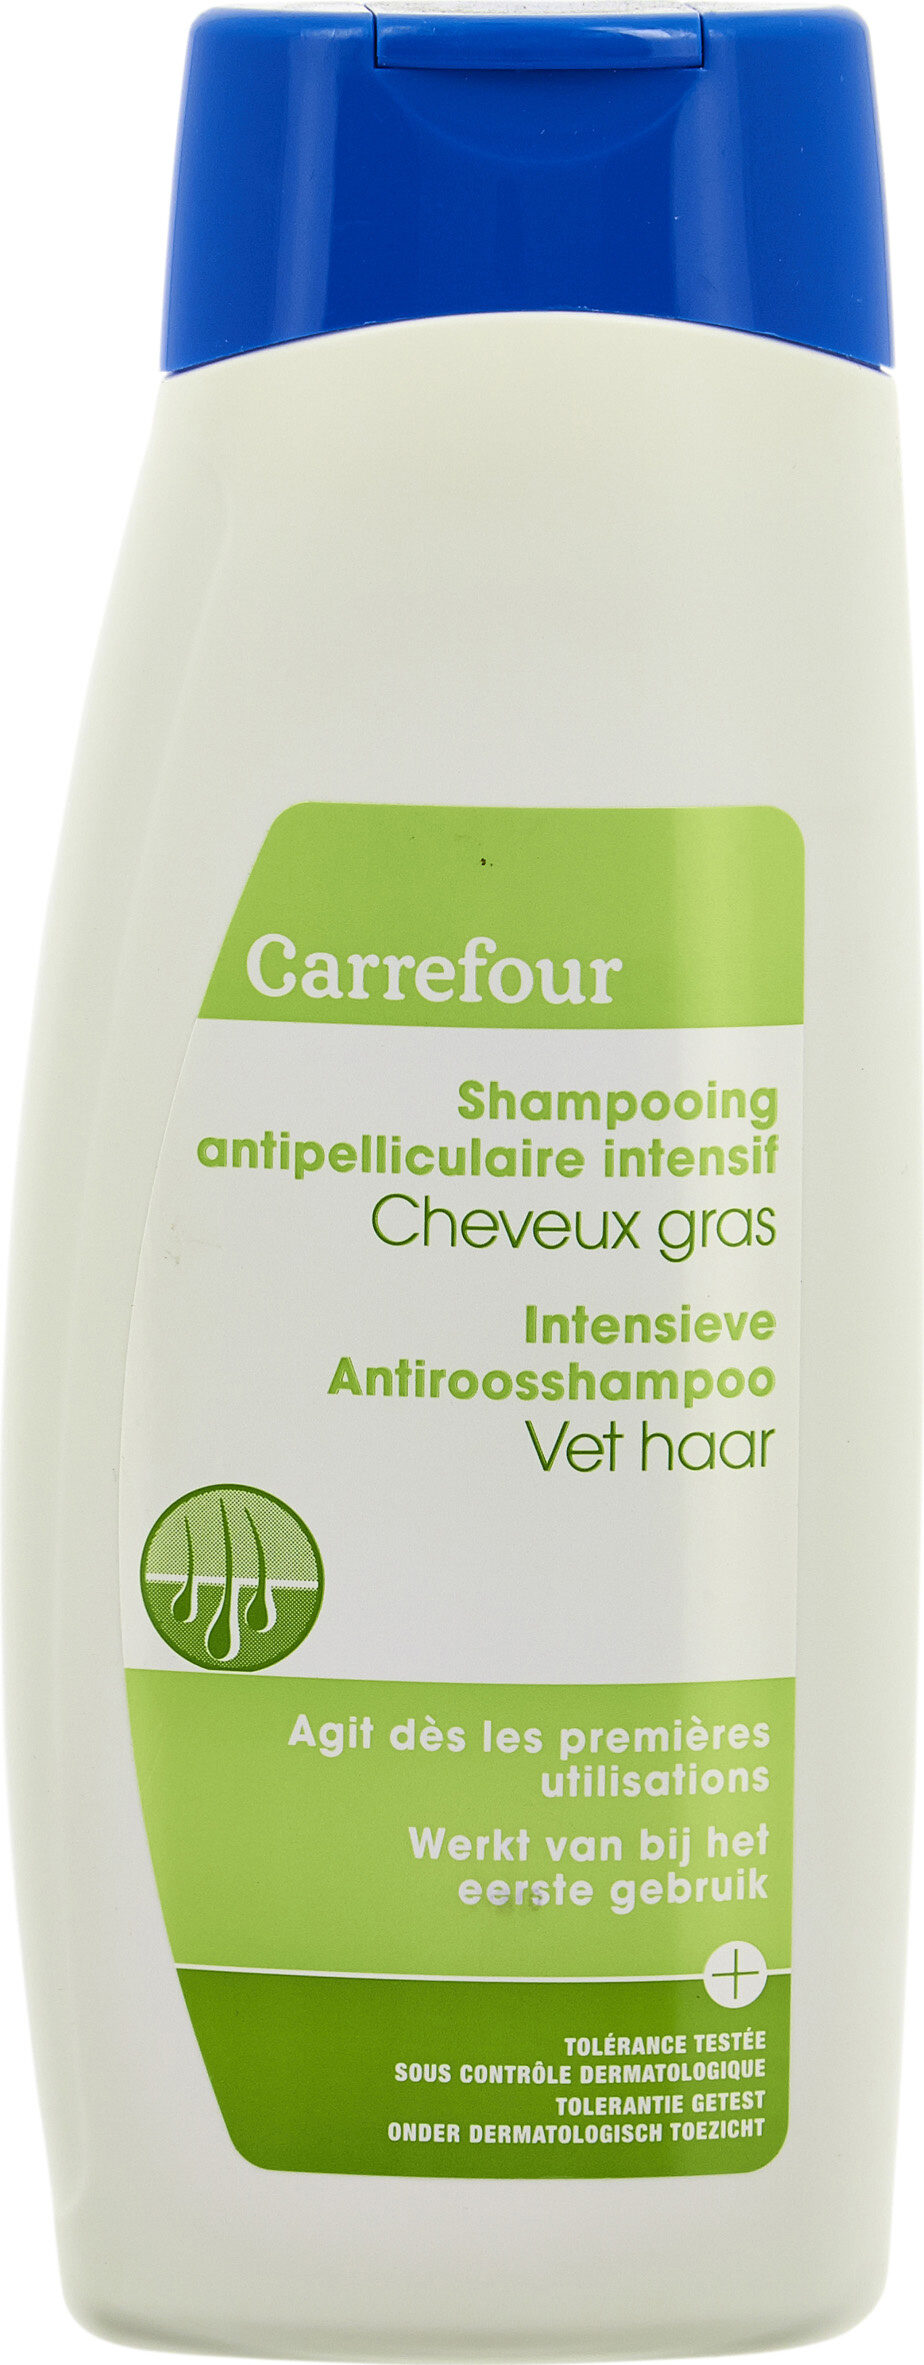 Shampooing antipelliculaire intensif Cheveux gras - Produto - fr